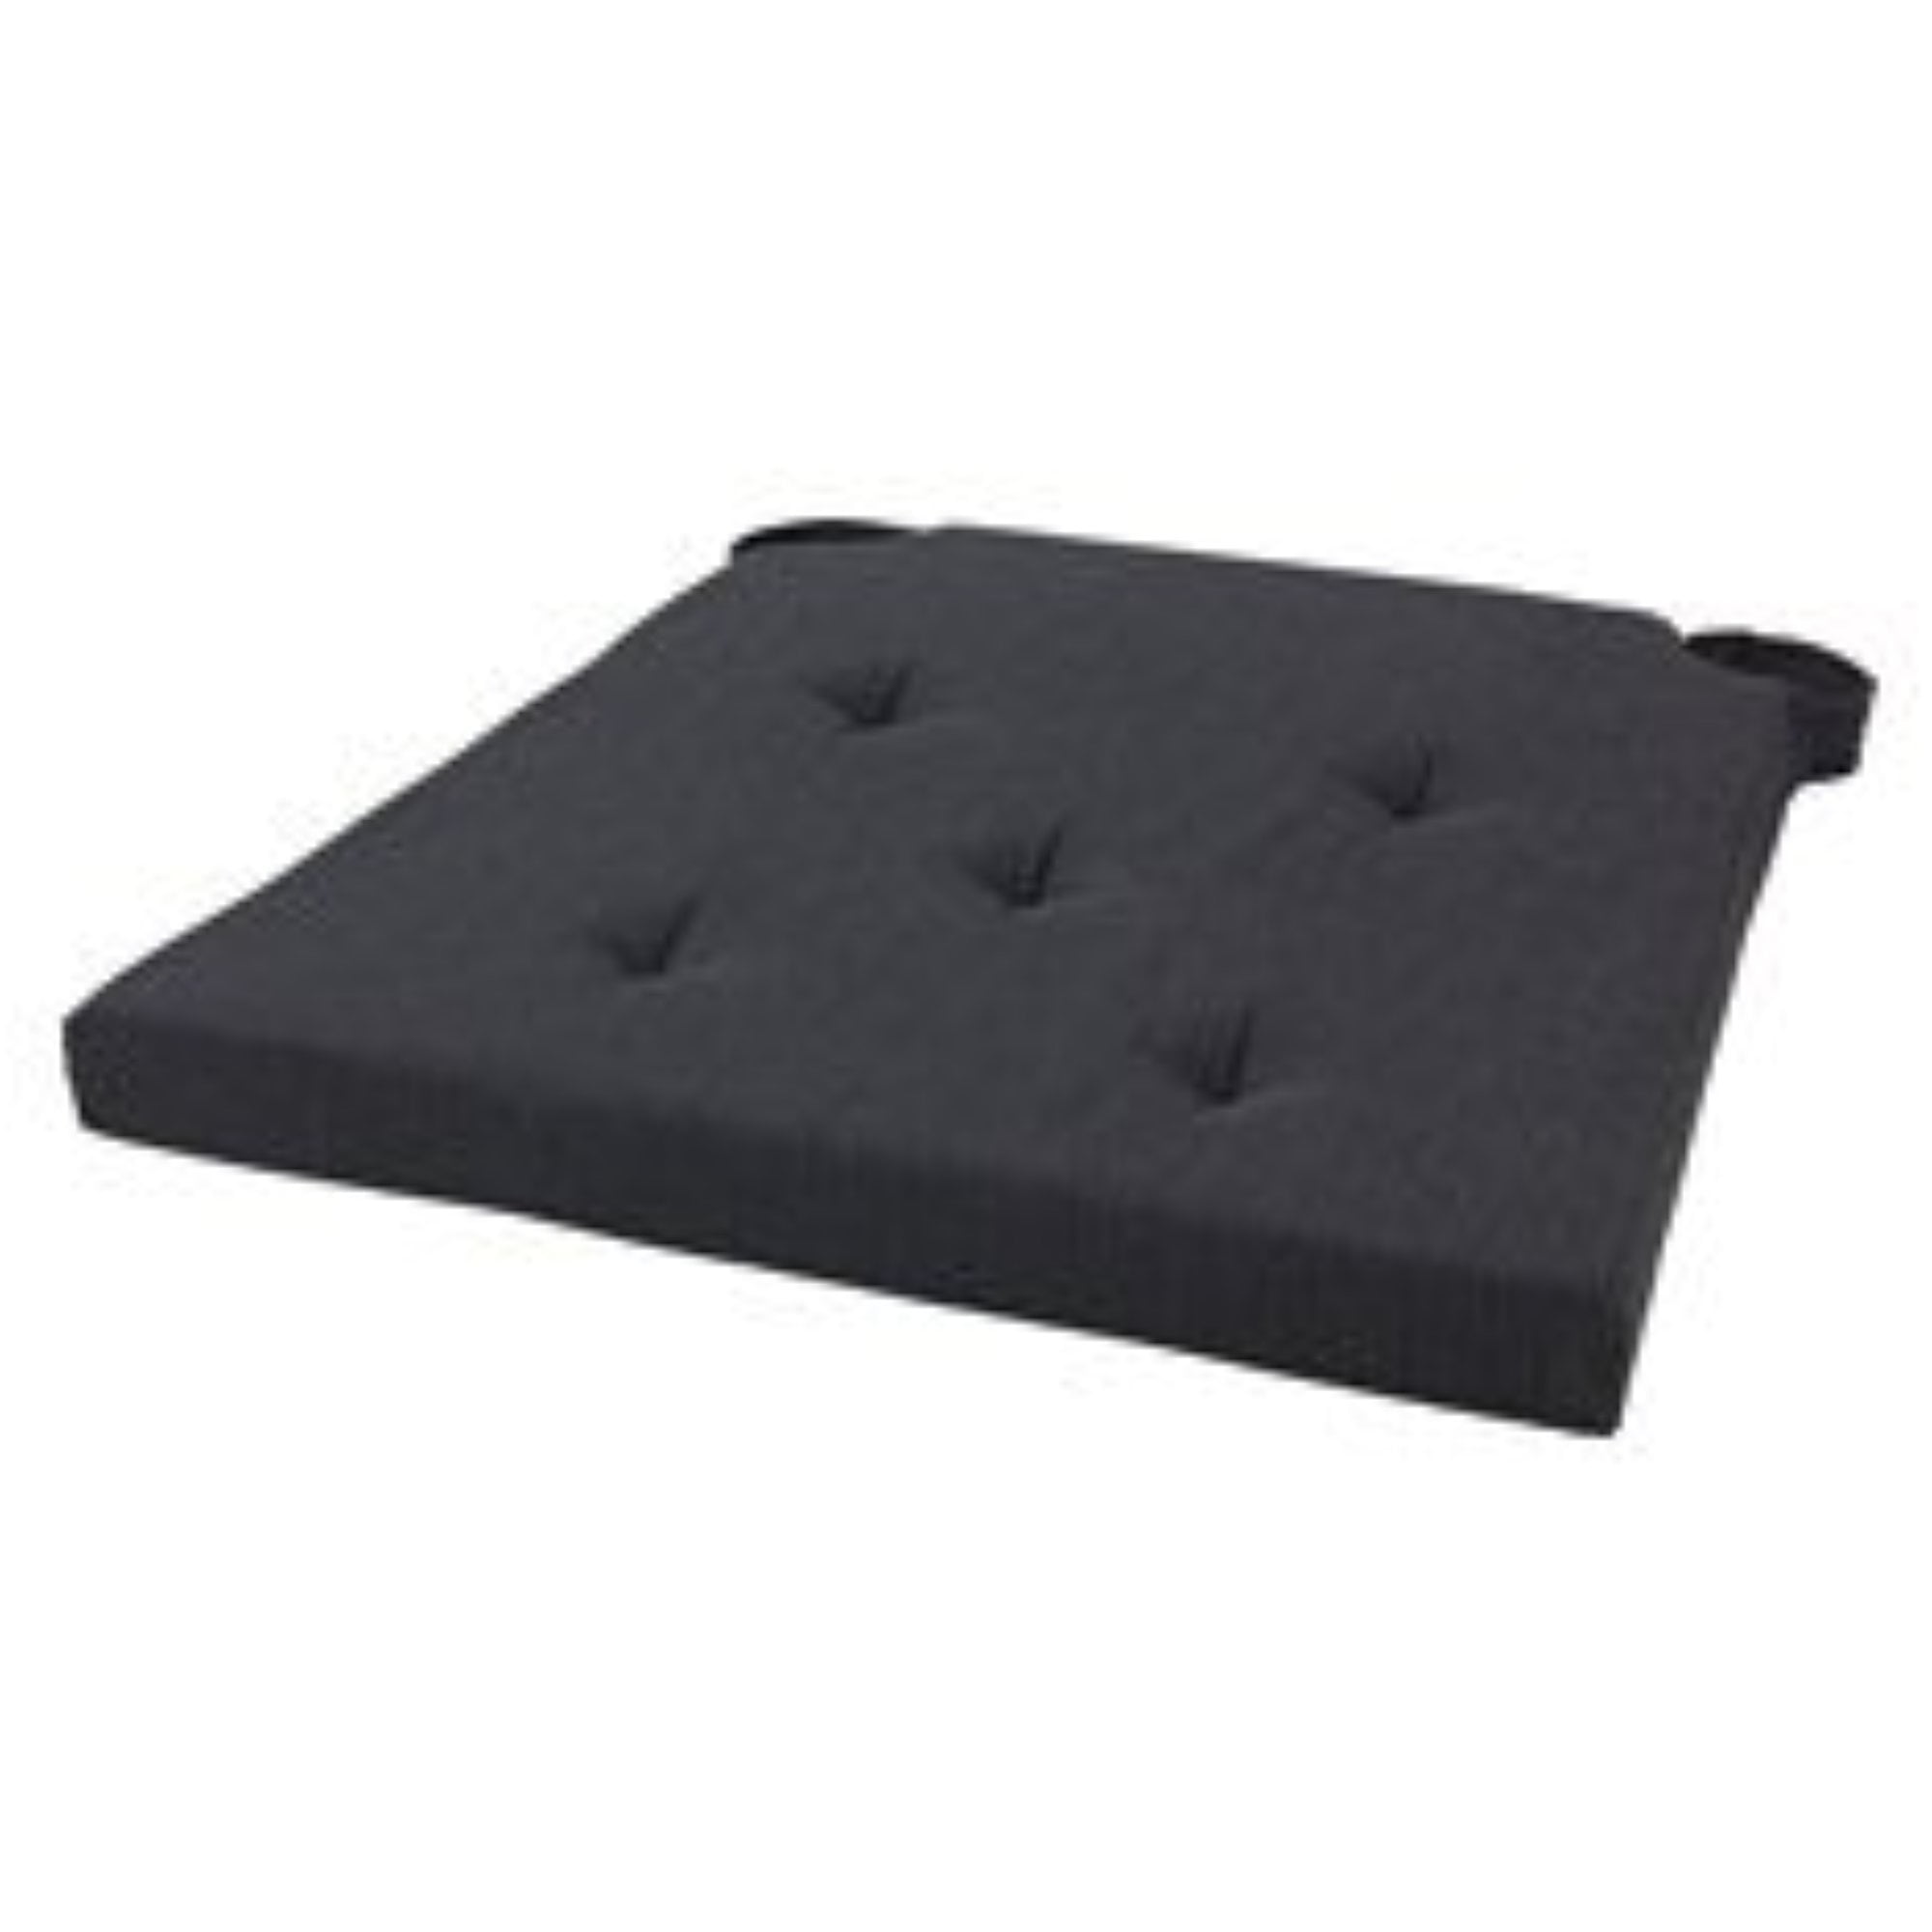 STRÅFLY Chair pad, dark gray, 14 - IKEA